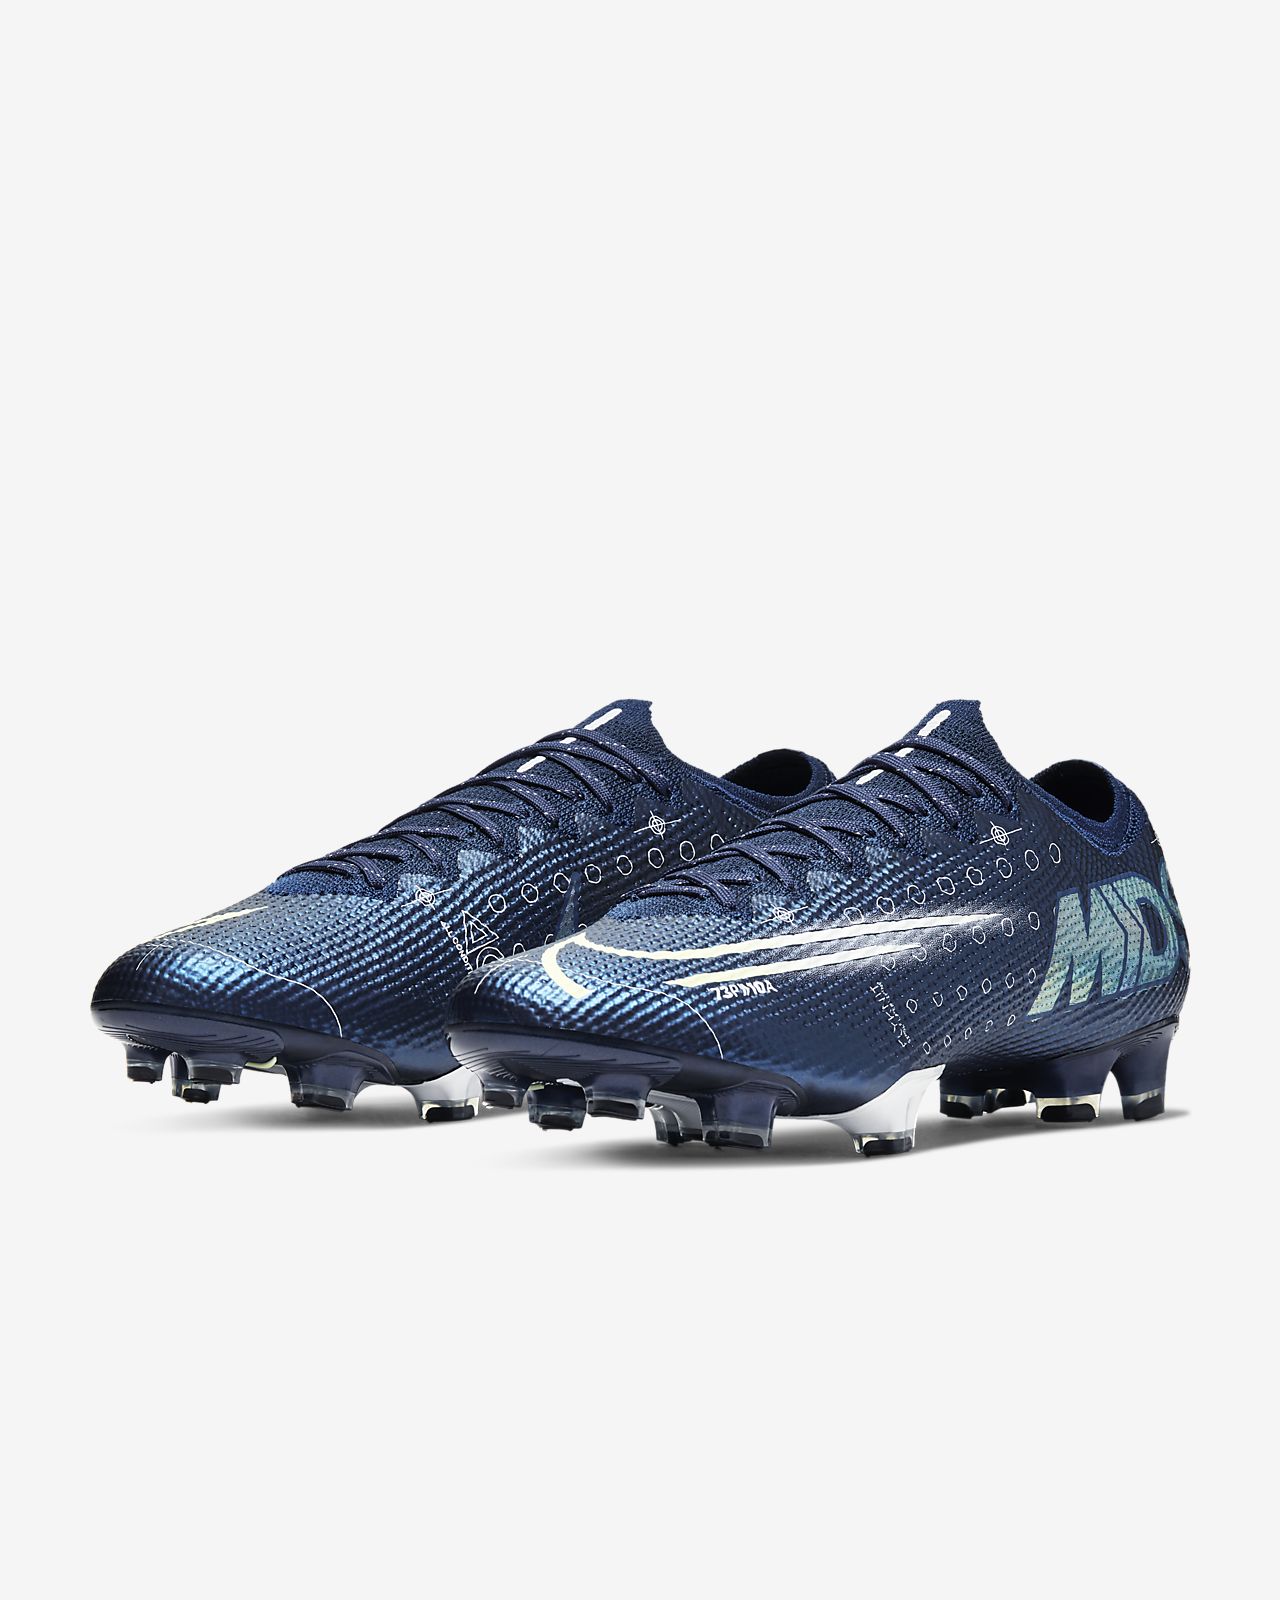 nike mercurial vapor x superfly leopard ag soccer shoes 2014